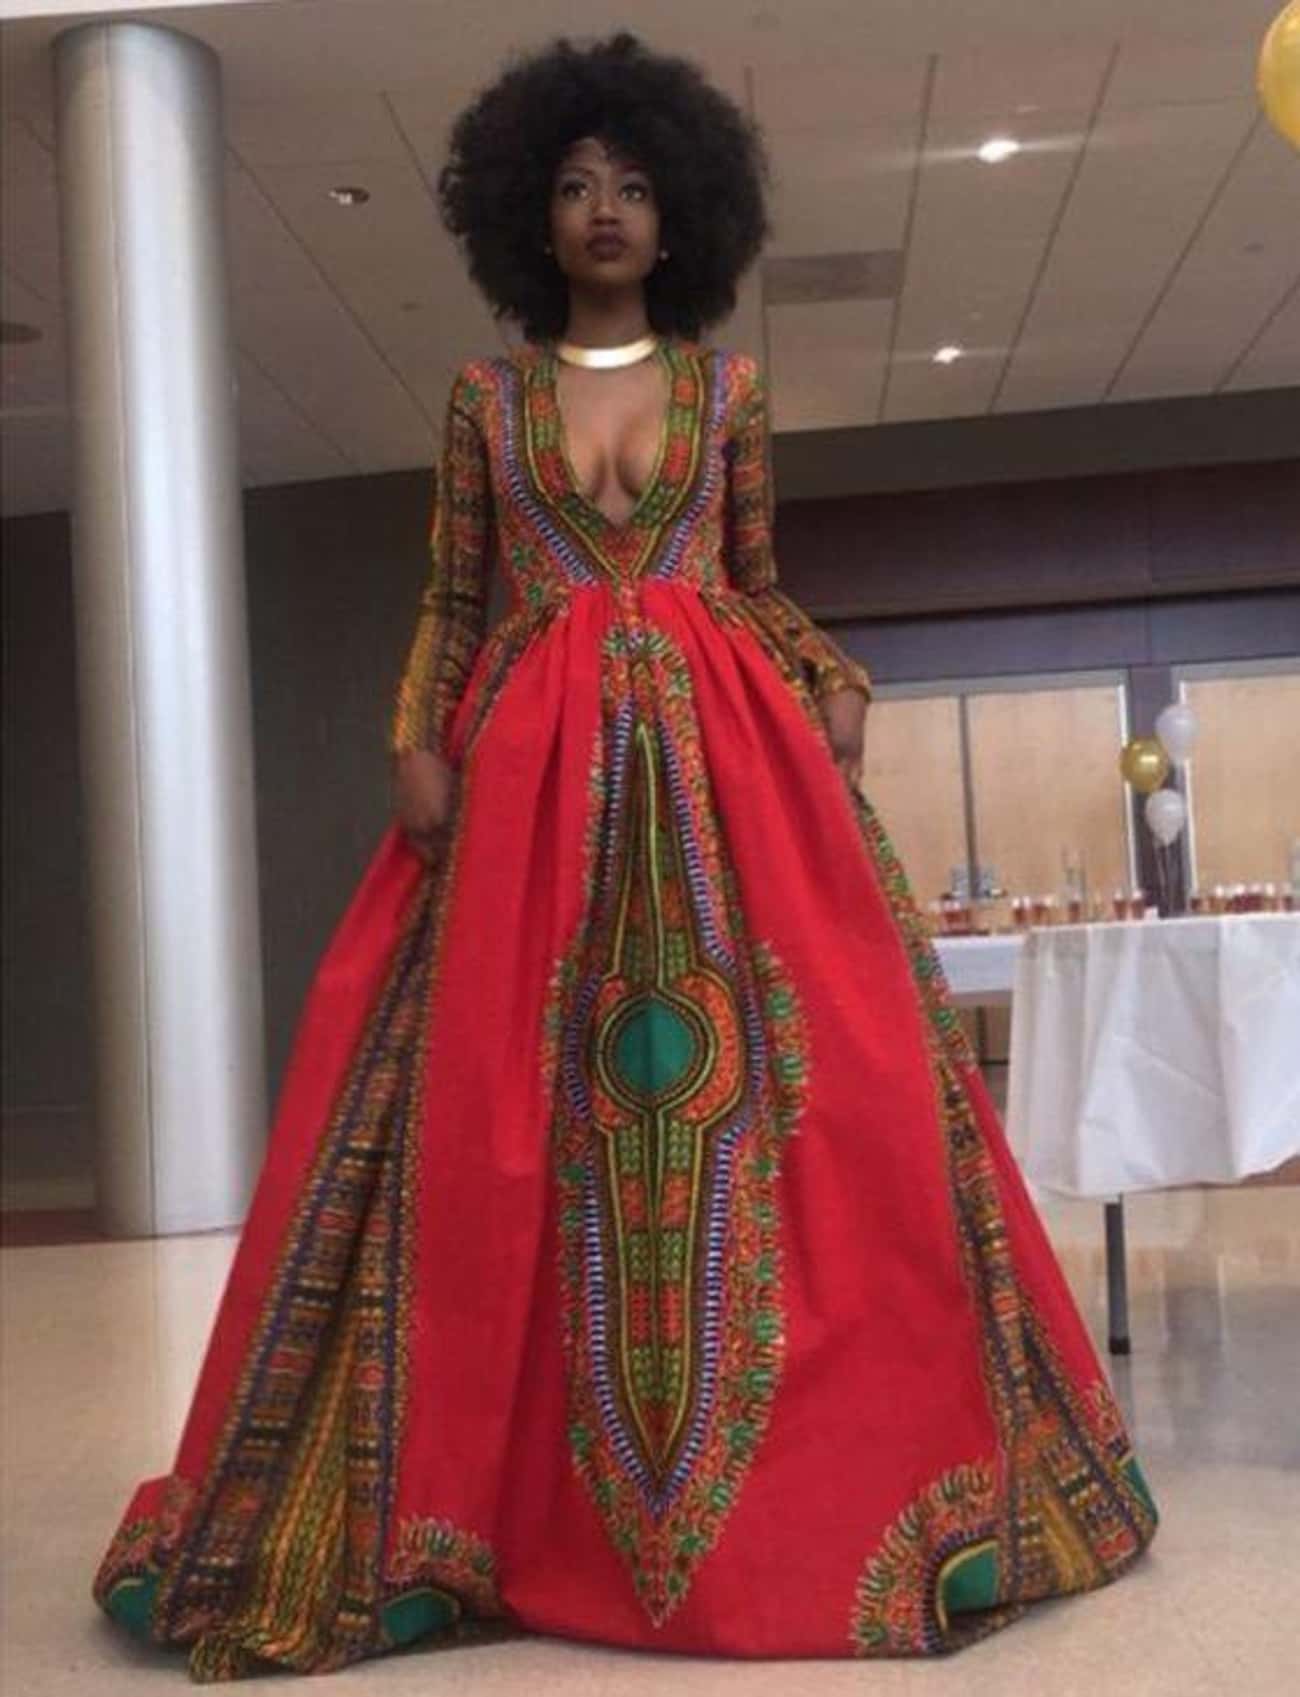 Amazing Afro-Centric Dress